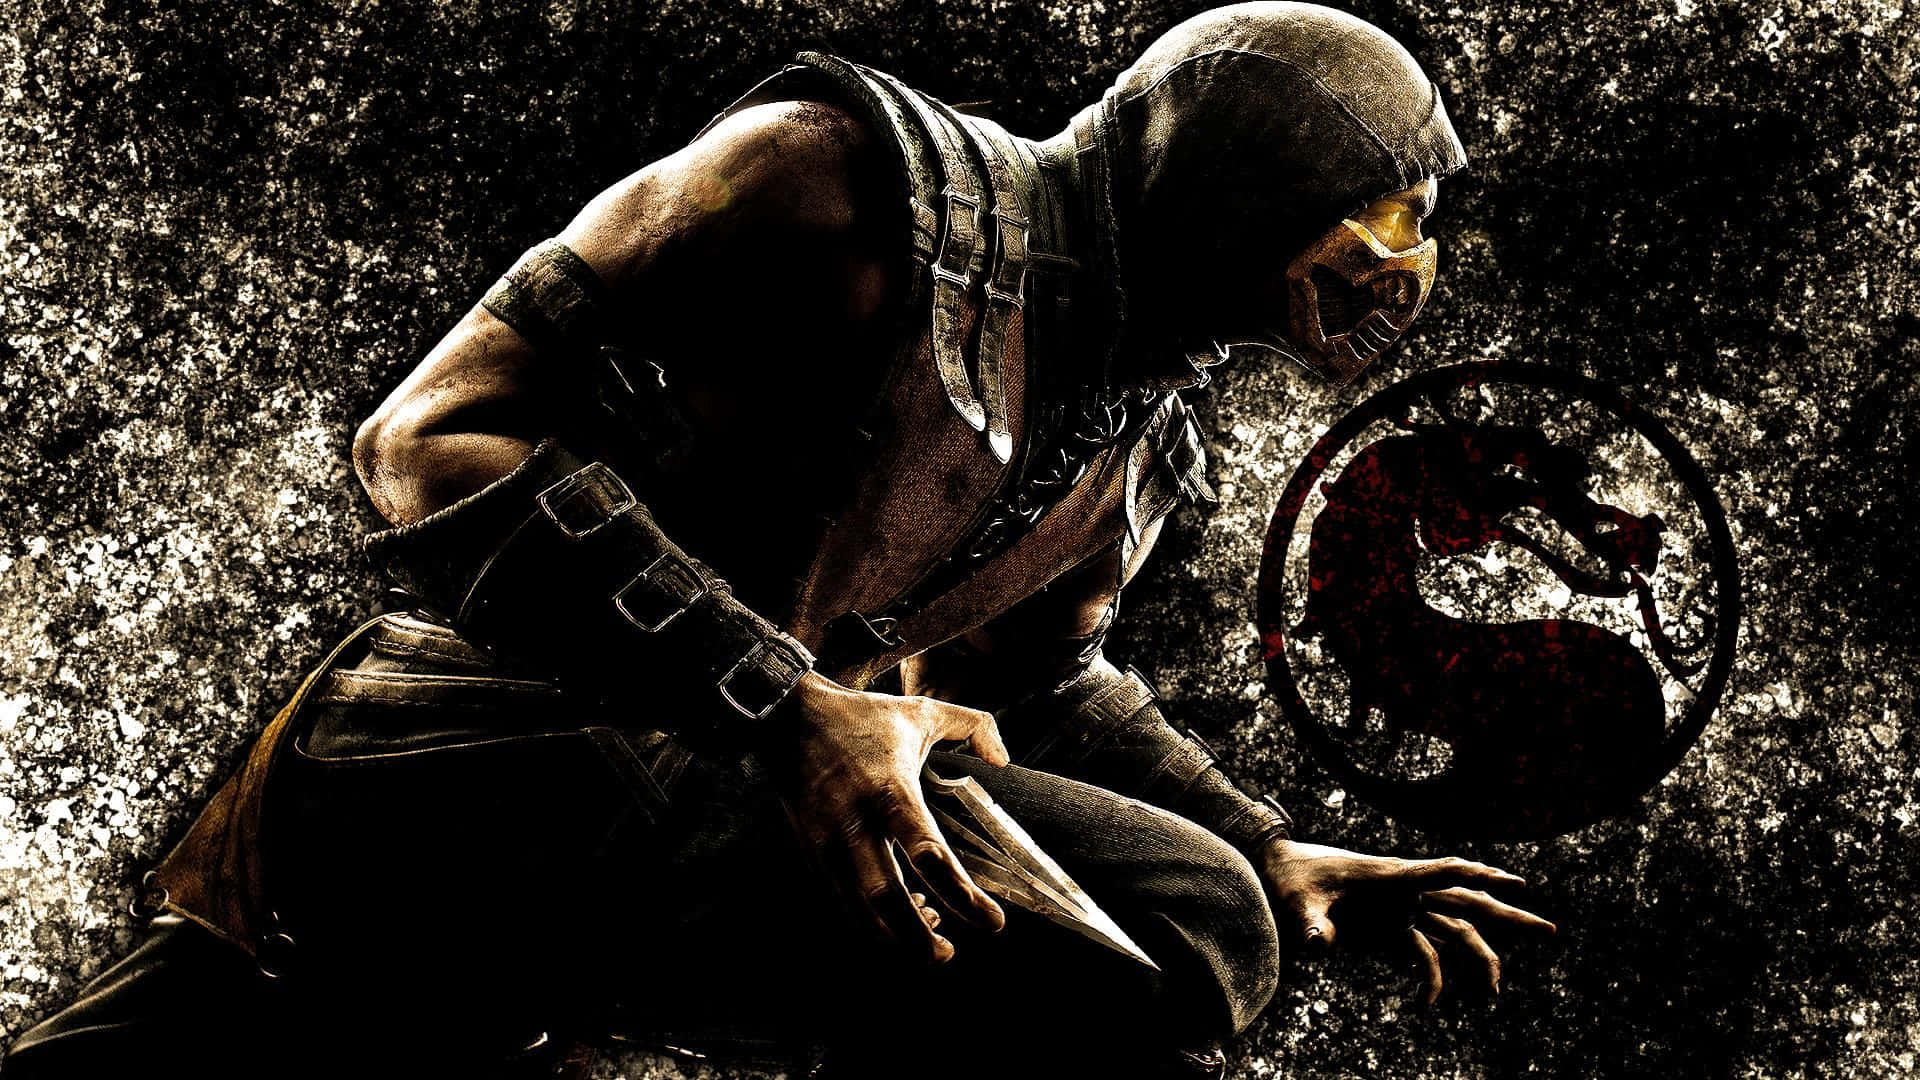 “Revenge is a dish best served cold” - Mortal Kombat Scorpion Wallpaper